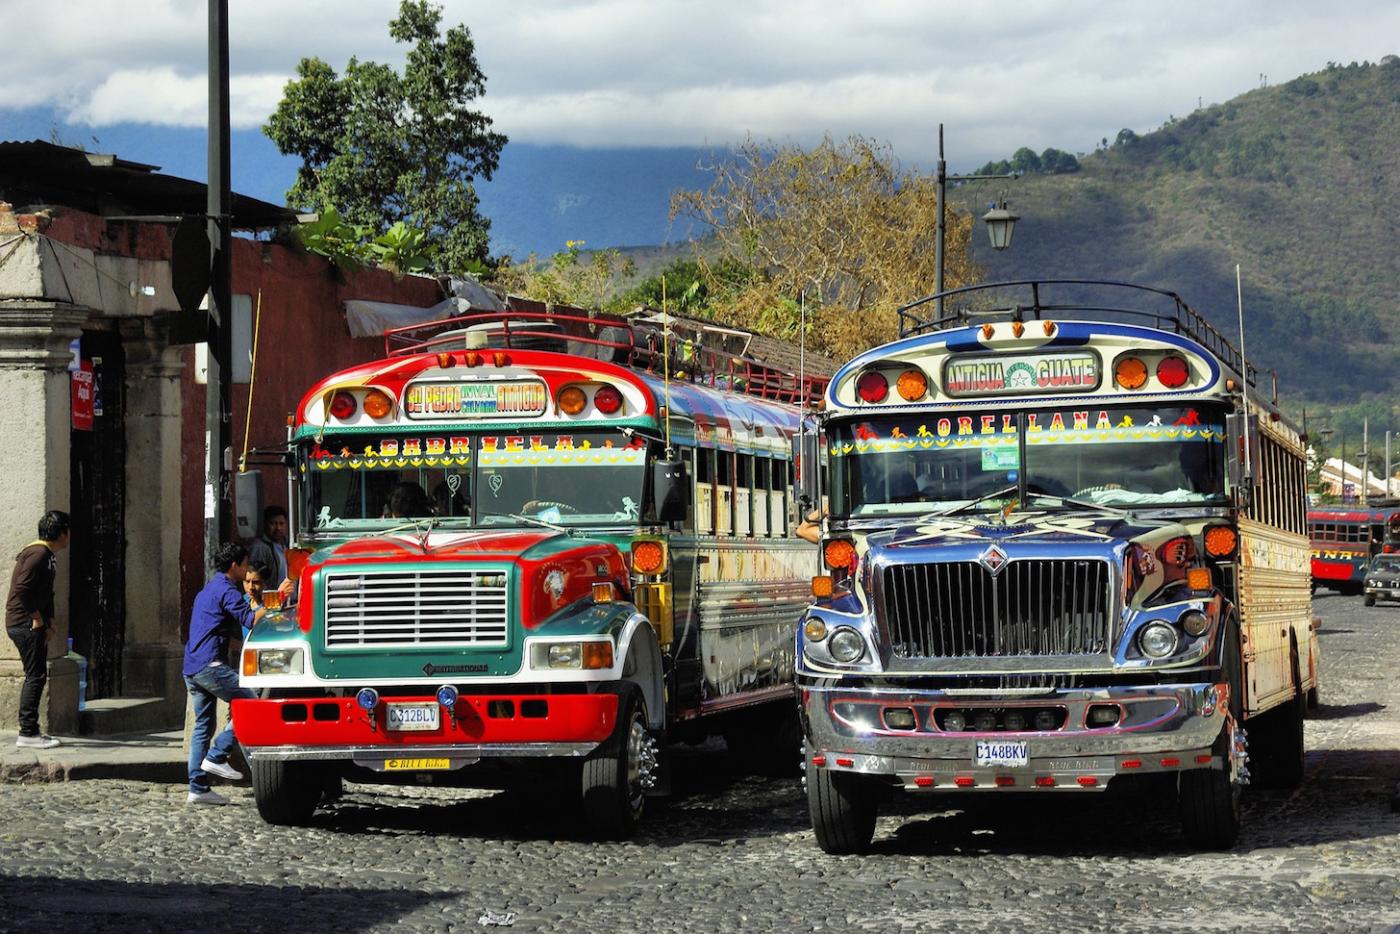 Chicken buses in Antigua, Guatemala